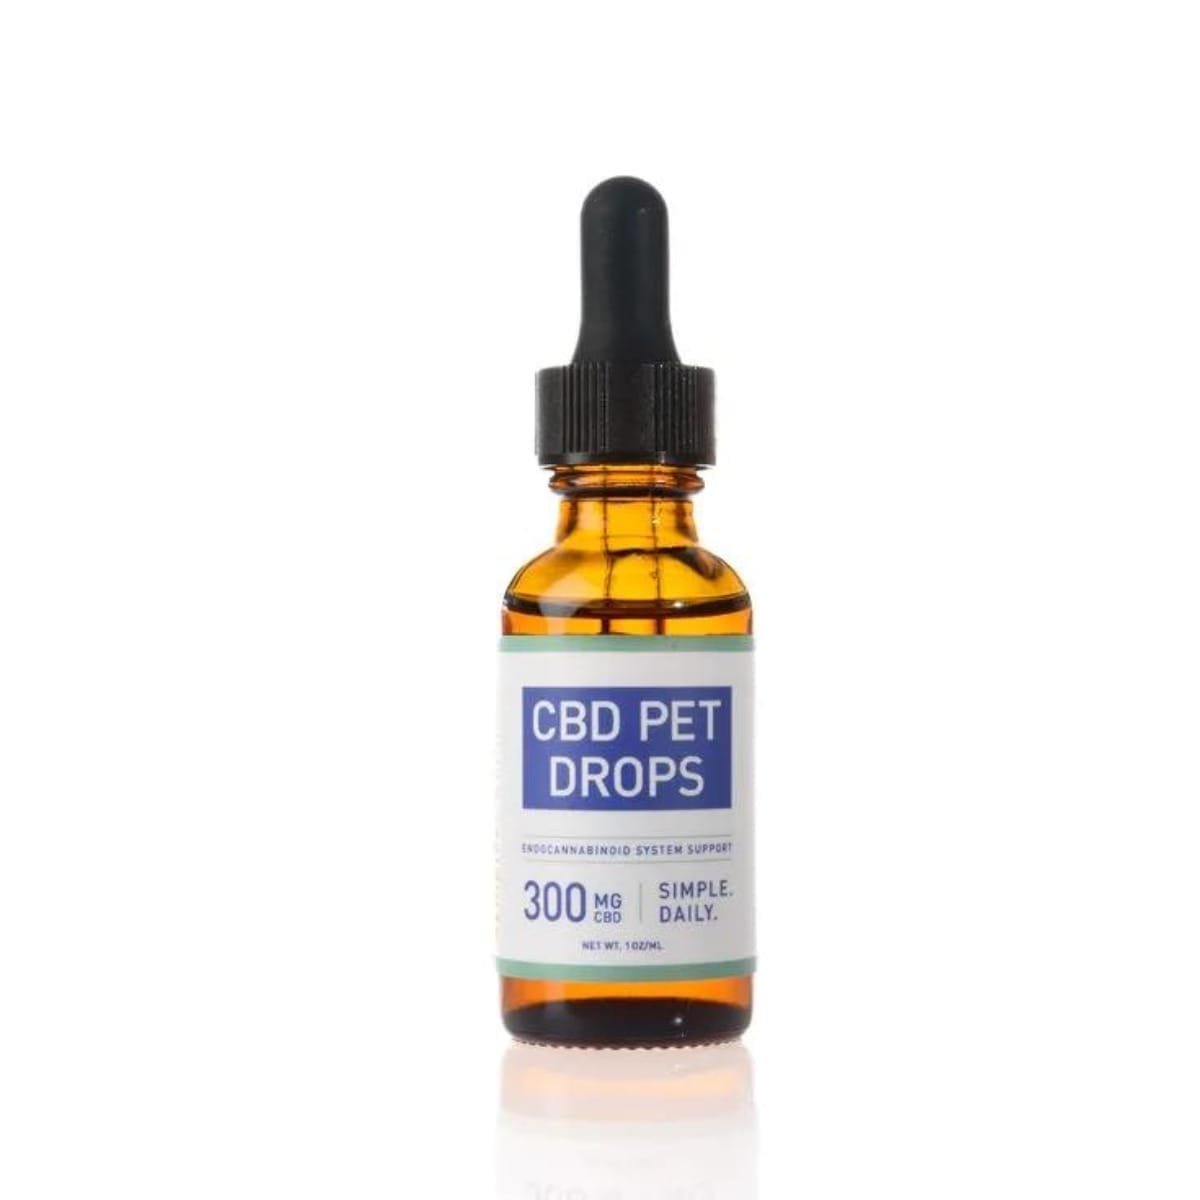 Sympleaf 300mg CBD Hemp Extract Pet Oil